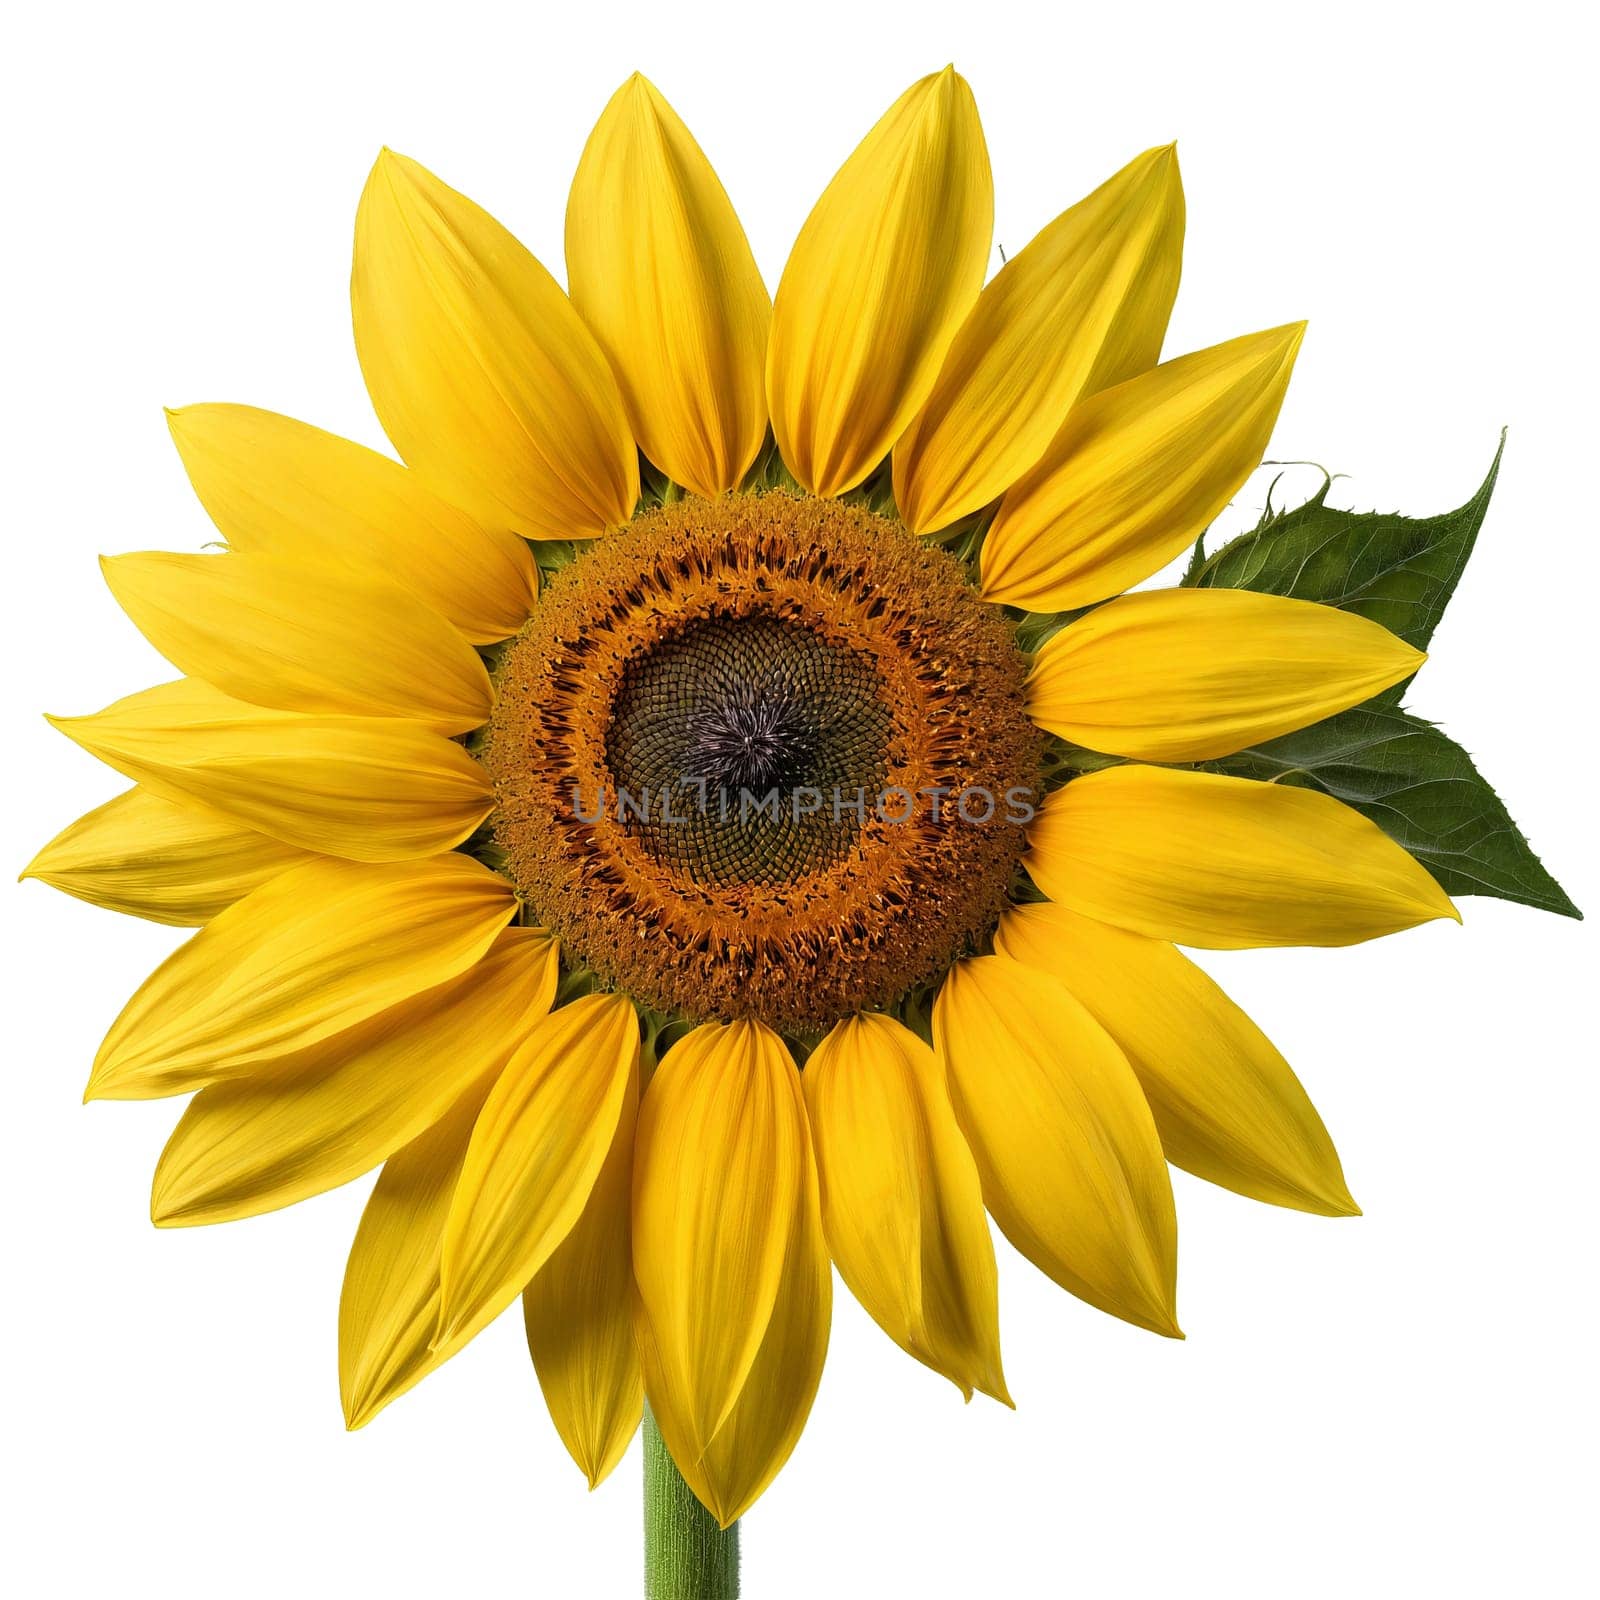 Yellow sunflower large flower head with bright petals dark brown center Helianthus annuus Teddy Bear by Matiunina